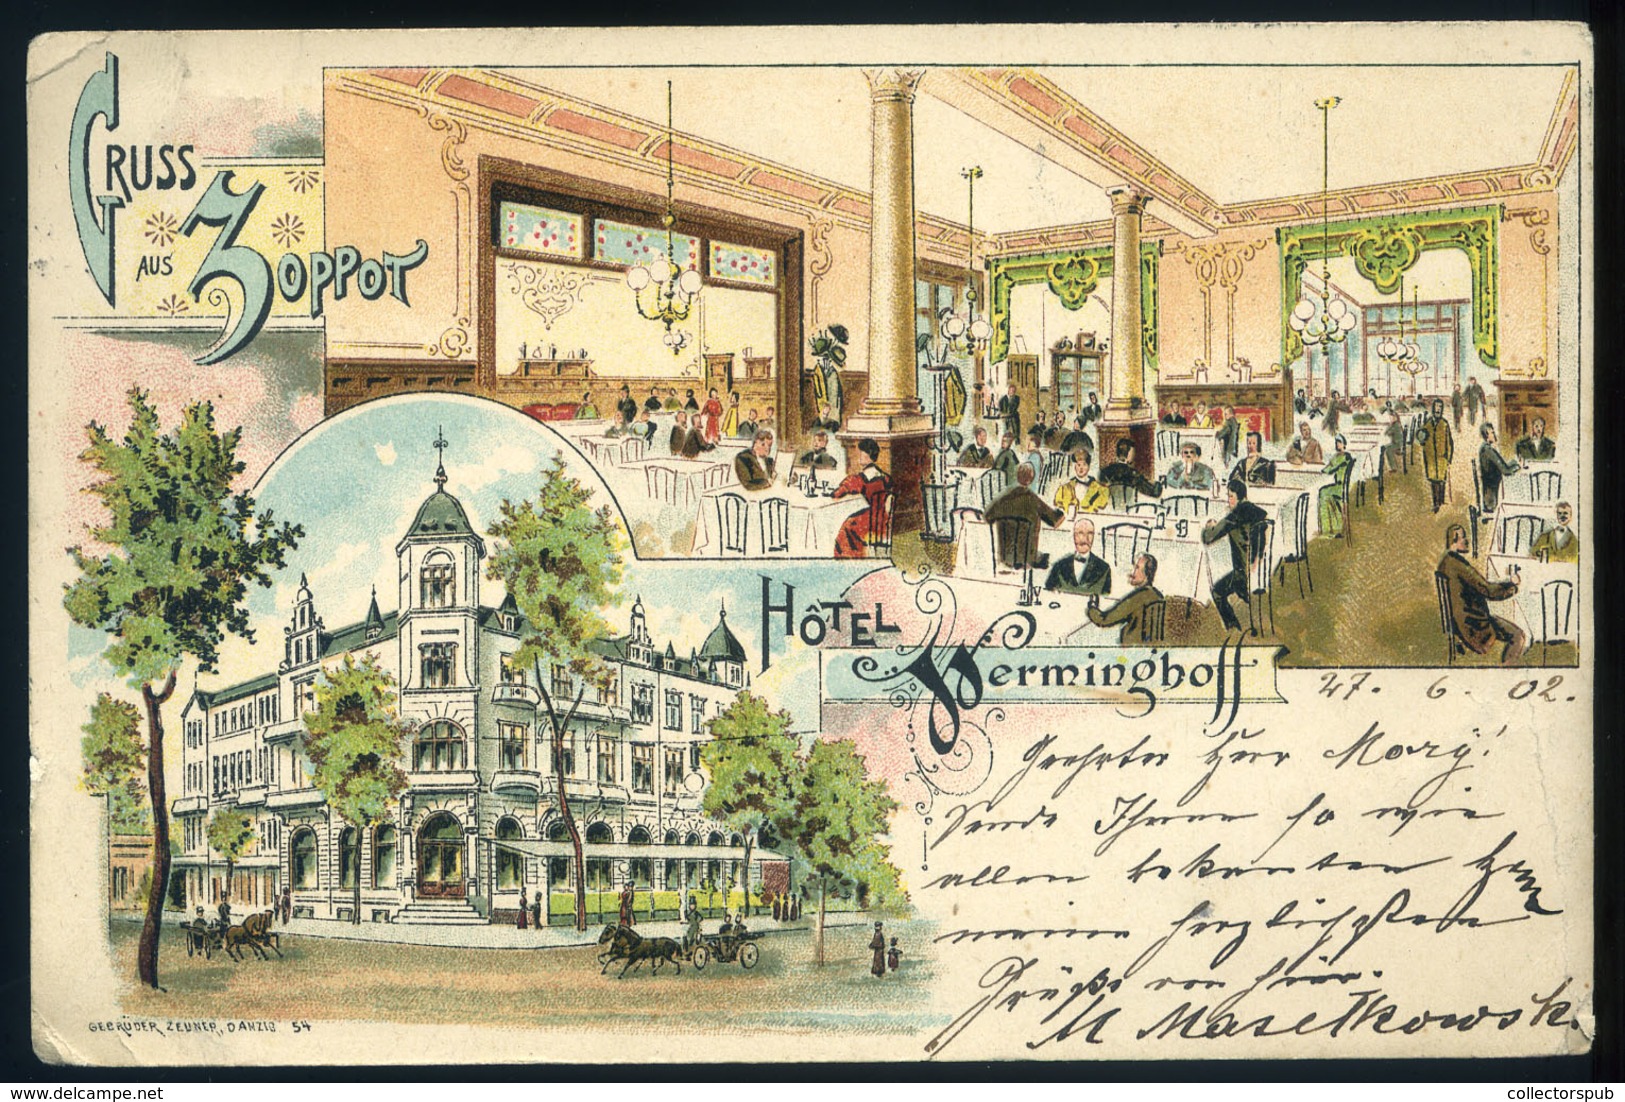 ZOPPOT  1902. Hotel Werminghoff Litho Képeslap  /  Hotel Werminghoff Litho Vintage Pic. P.card - Polen